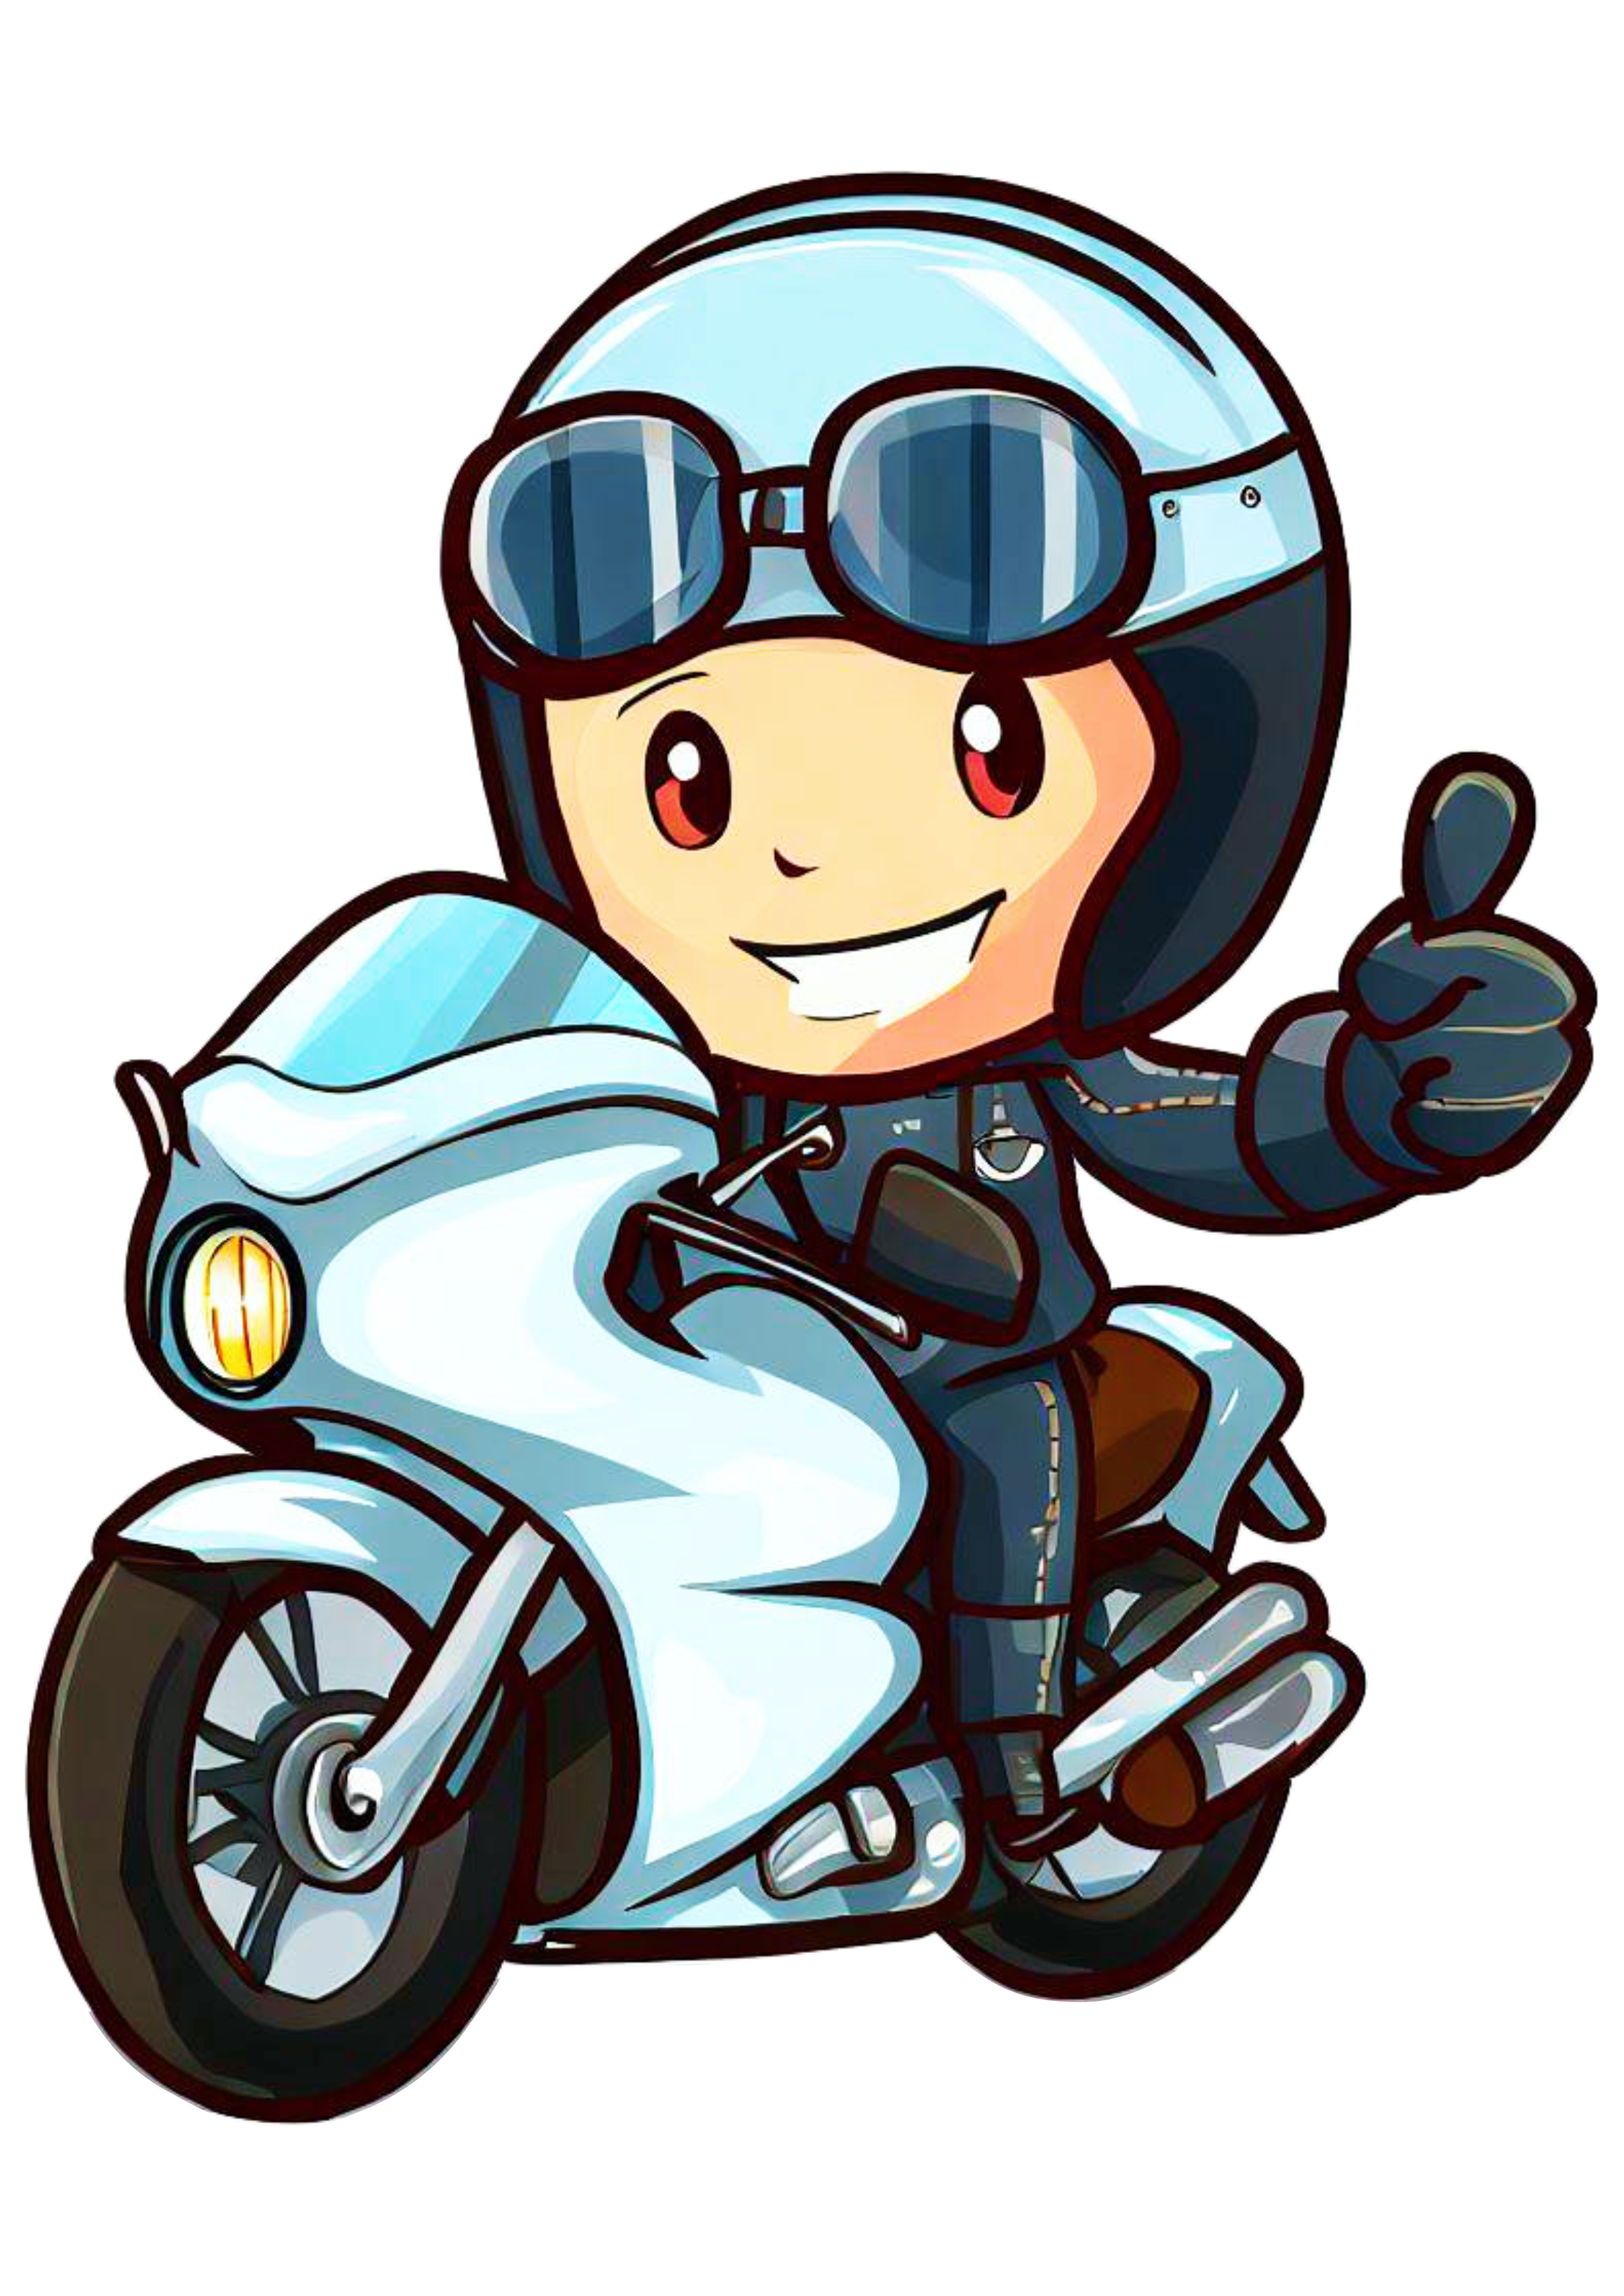 Motoboy tirando onda de moto motocicleta desenho colorido alta velocidade parceria mecânico de motos png